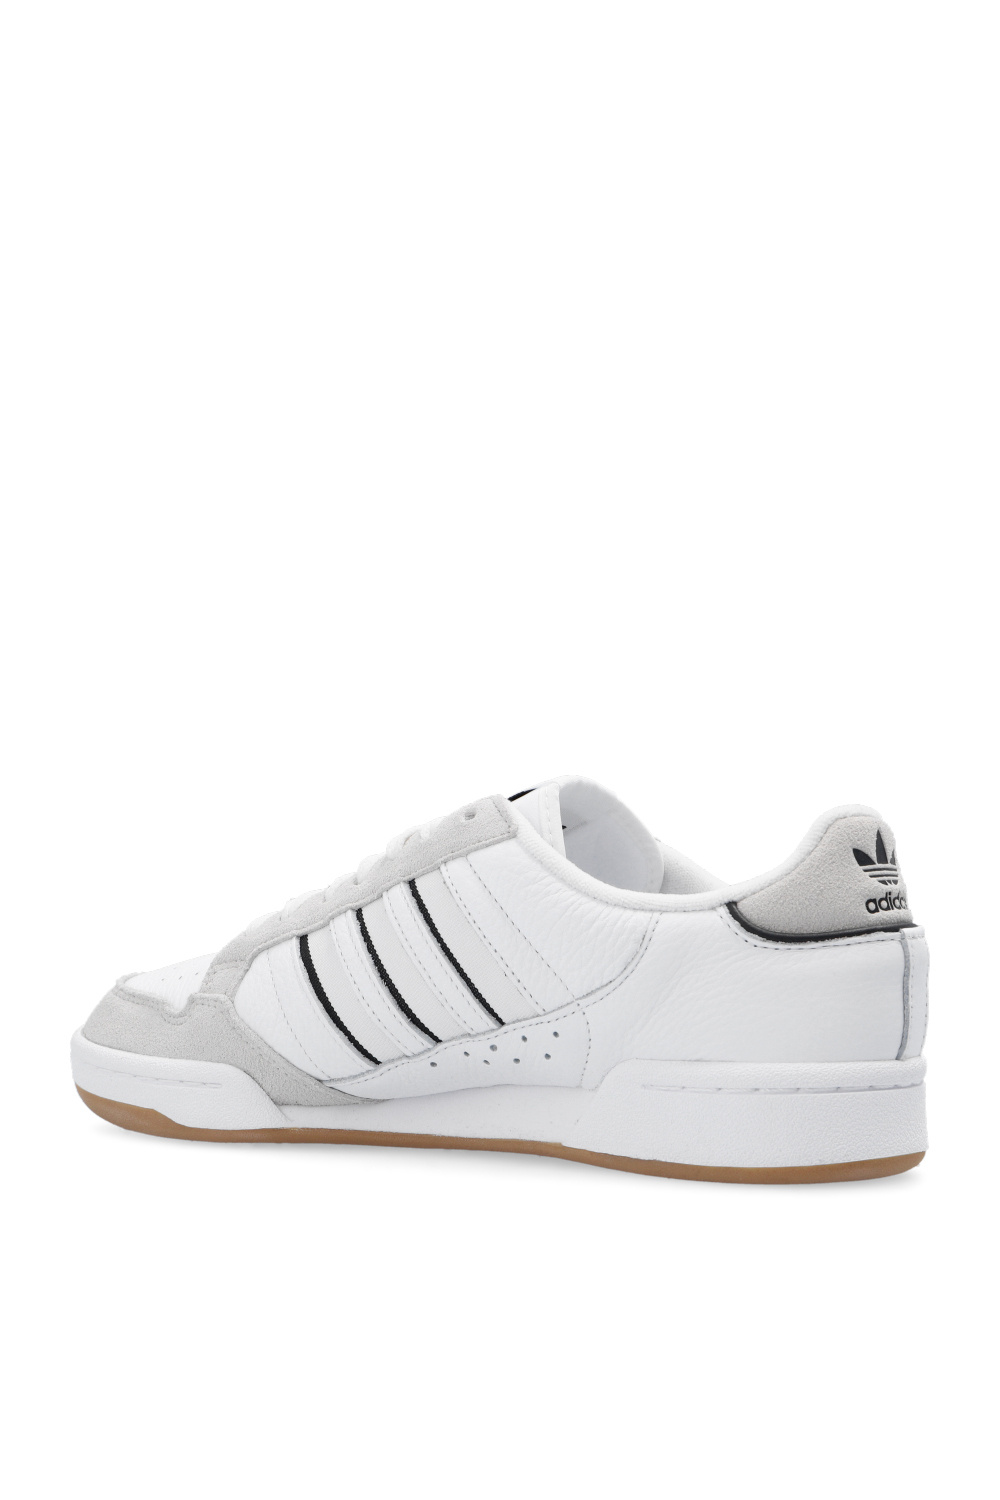 Beige \'Continental 80 Stripes\' sneakers Germany - ADIDAS adidas Originals - Originals 2971 StclaircomoShops